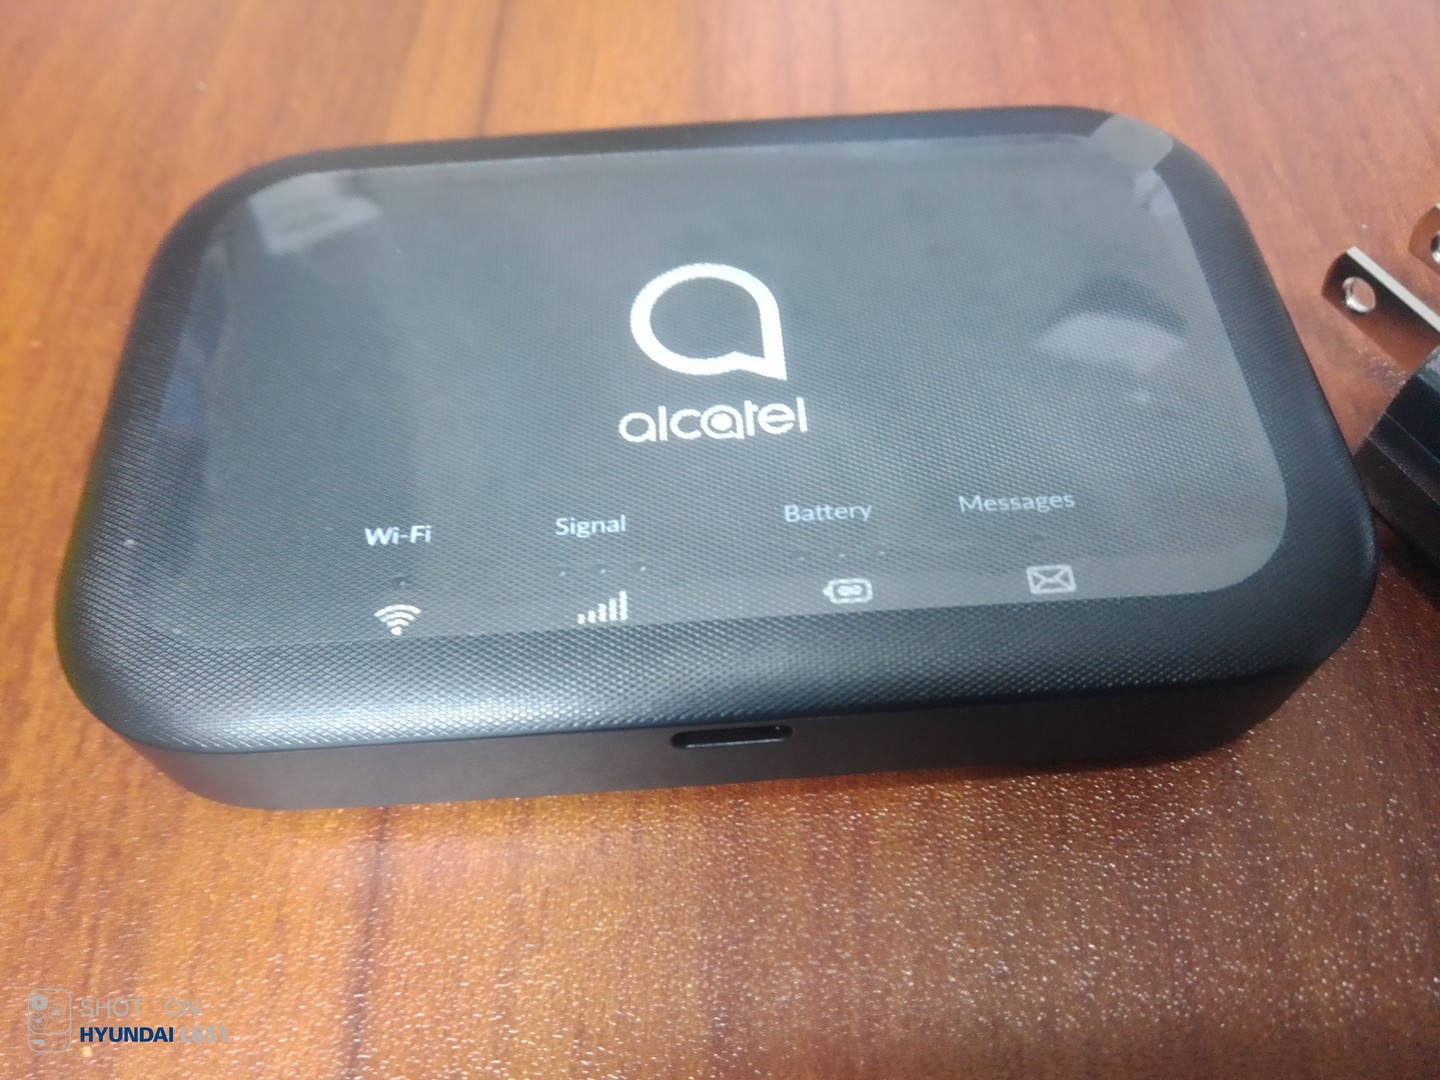 accesorios para electronica - Modem portatil Alcatel, puedes usarlo como power bank
 2